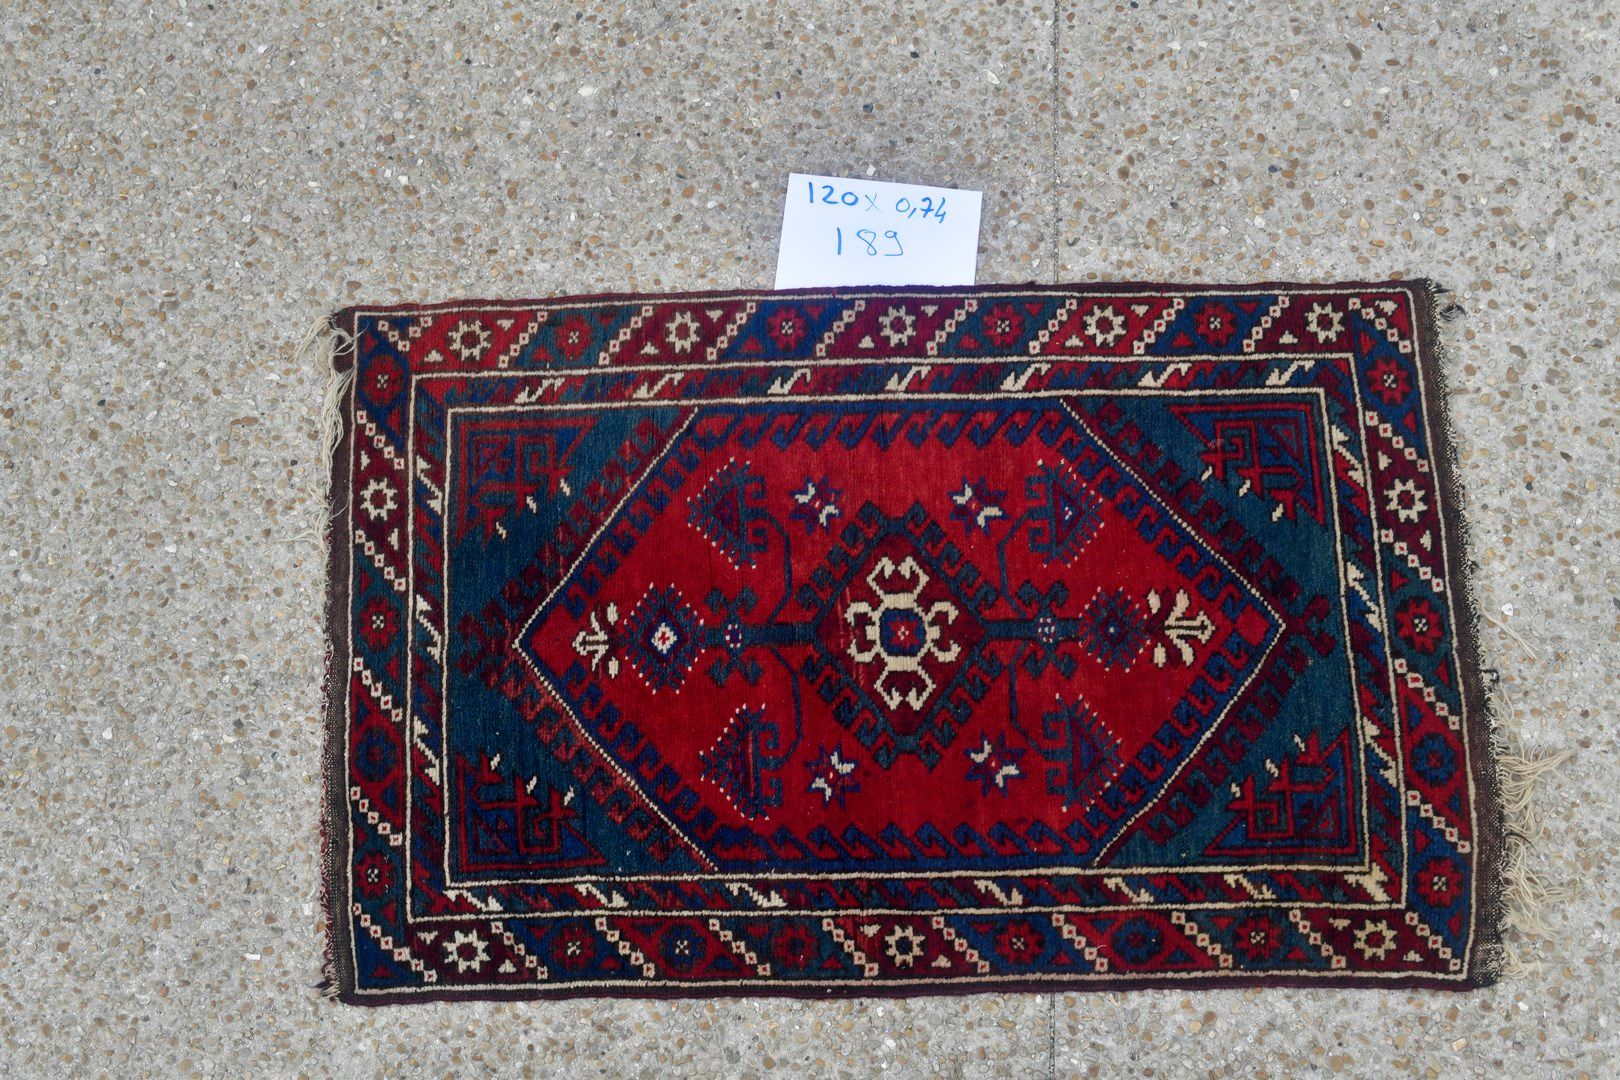 Null Dosemalti（土耳其），约1970年。

羊毛基础上的羊毛绒。

在帕尔马的背景上有几何装饰。

状况良好。 

120x74厘米